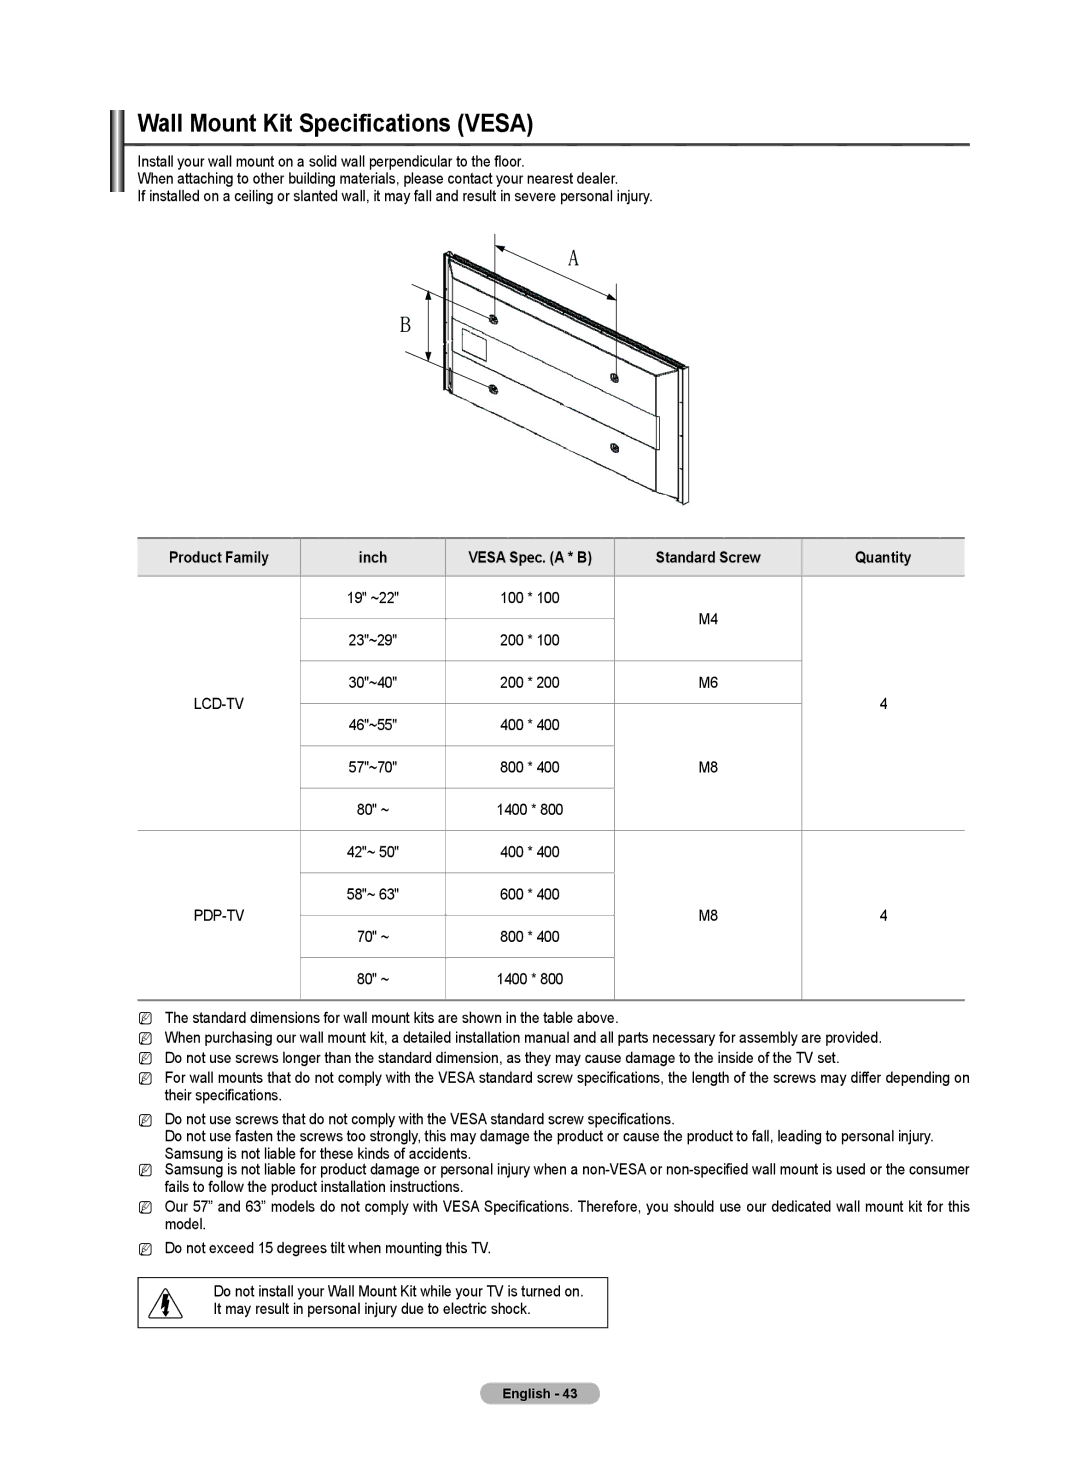 Samsung PN5B50SF Wall Mount Kit Specifications Vesa, Product Family Inch Vesa Spec. a * B Standard Screw Quantity 